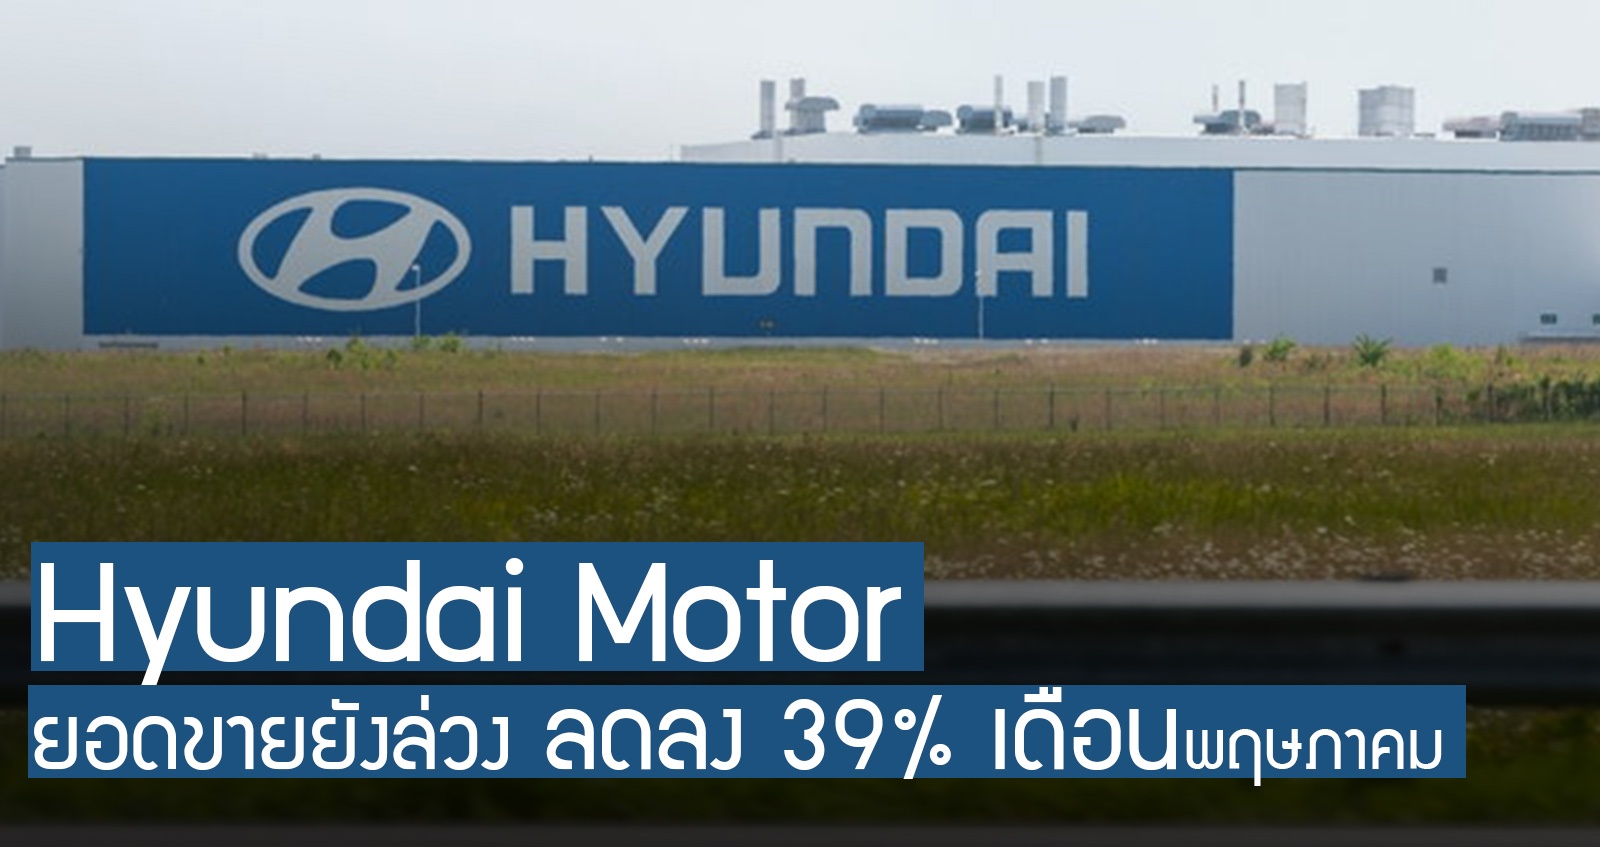 Hyundai Motor ยอดขายล่วง ลดลง 39% ในเดือนพฤษภาคมที่ผ่านมา